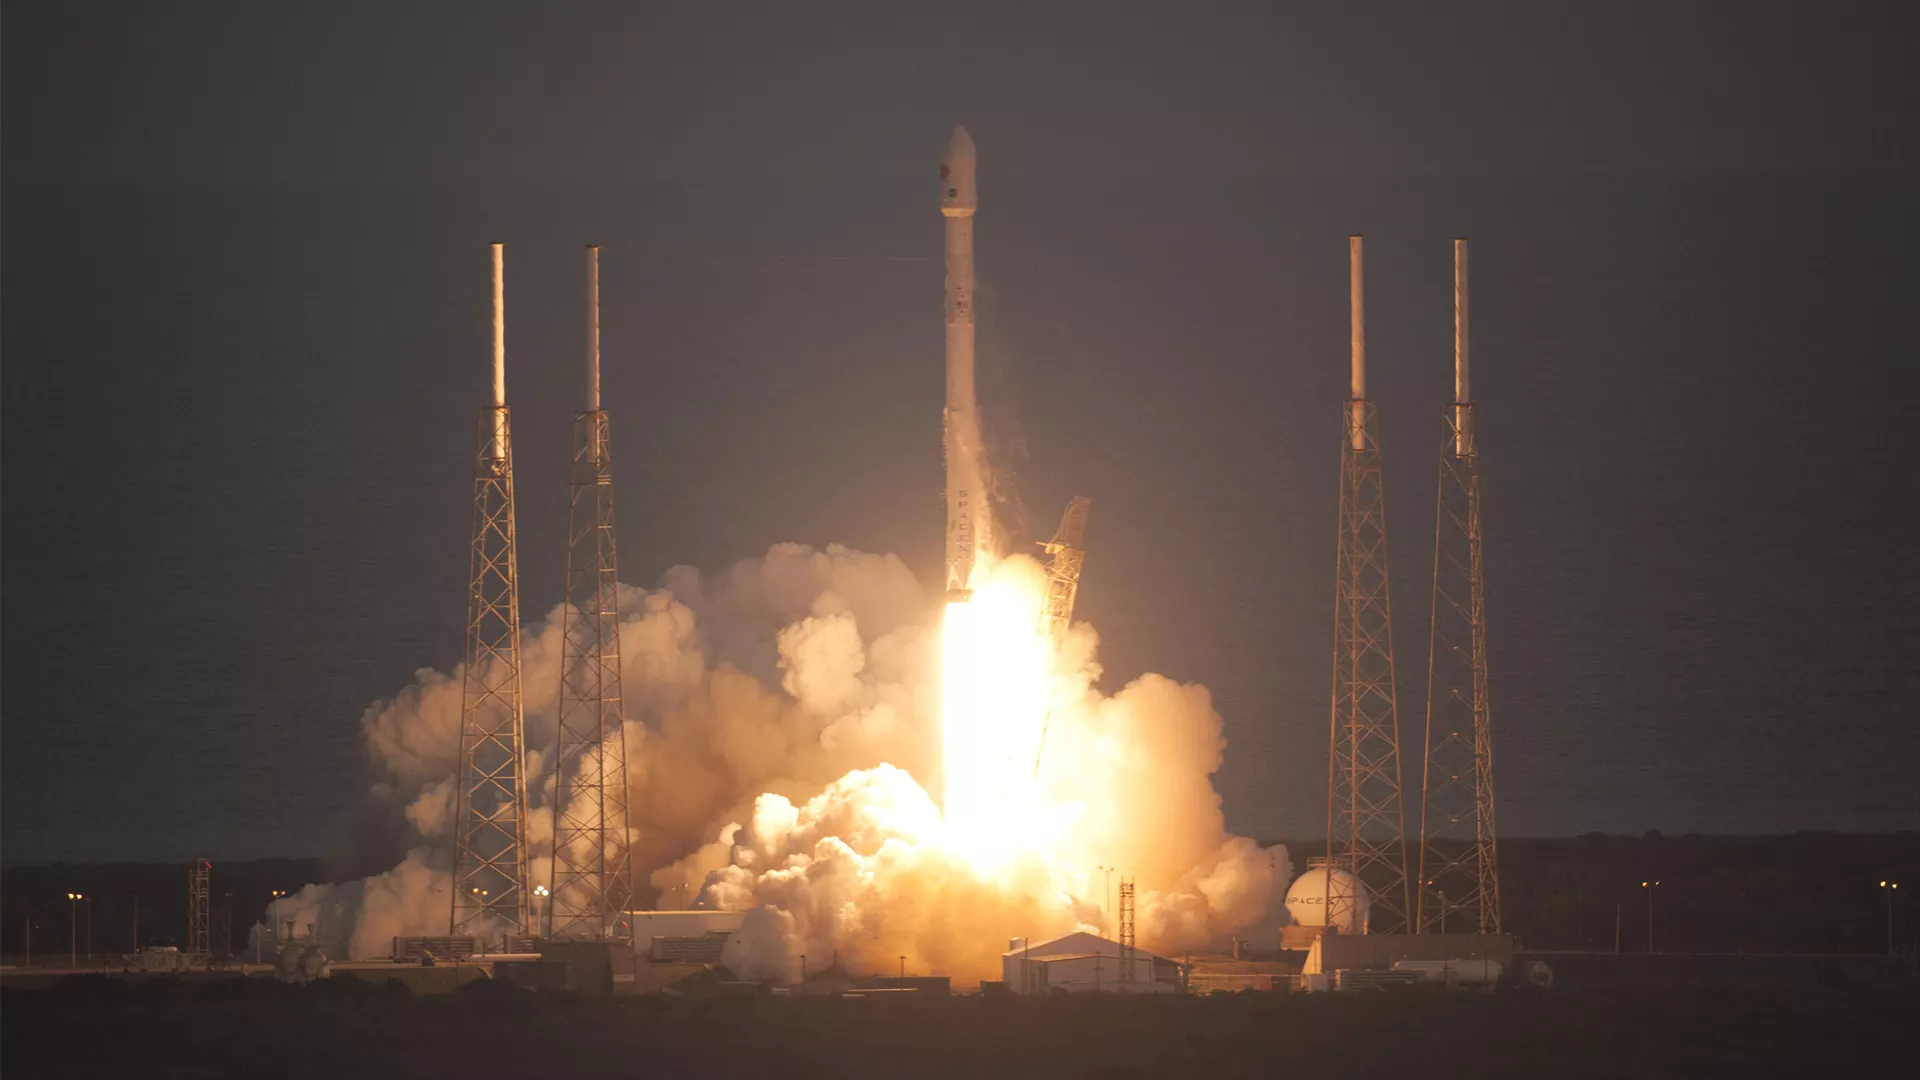 Image of the DSCOVR satellite launch aboard its rocket